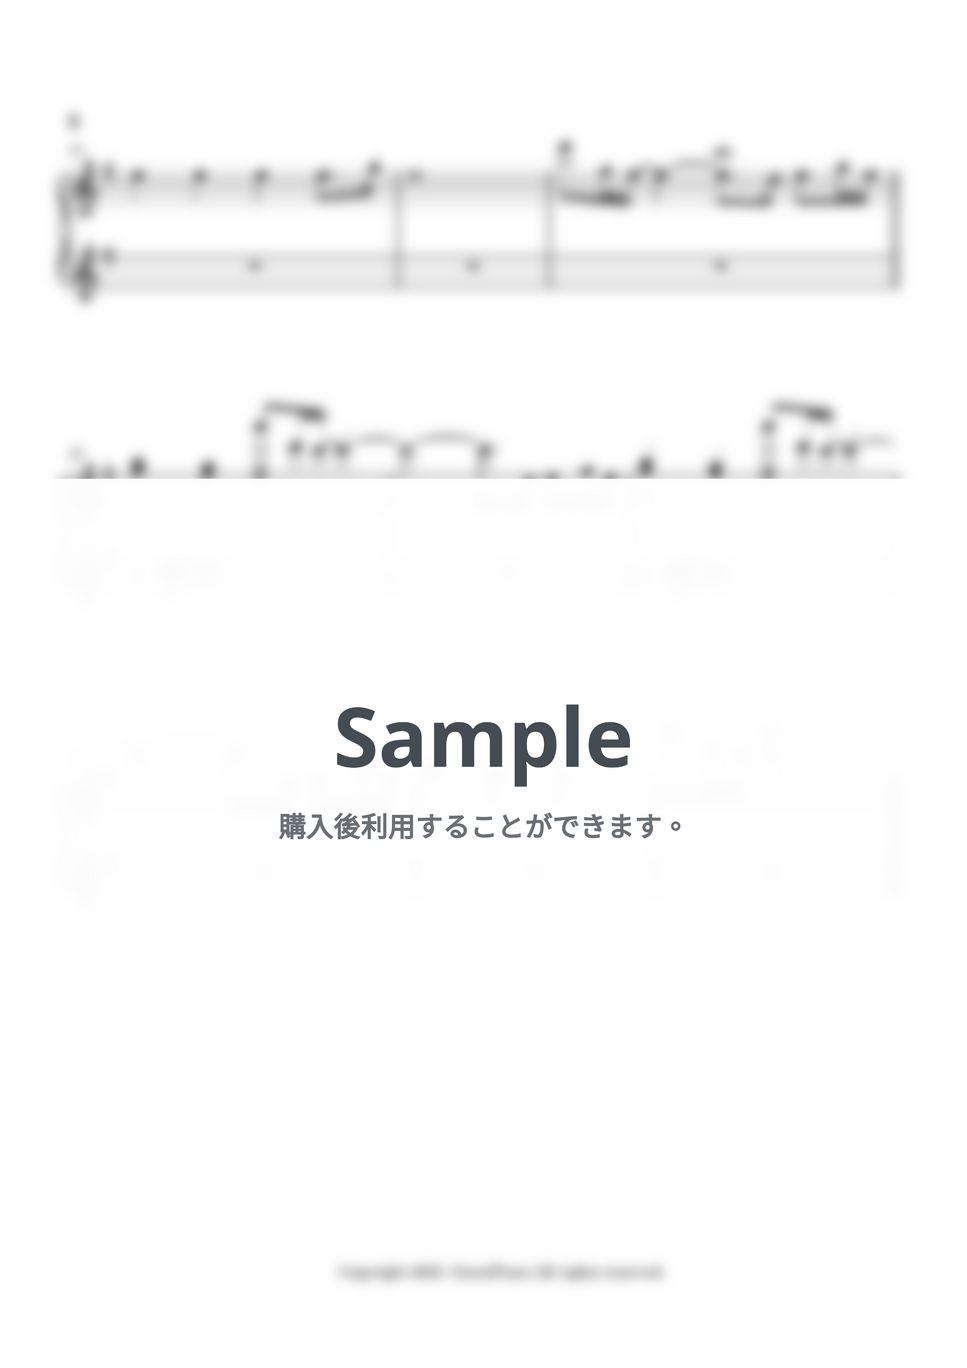 Joe Hisaishi - 静寂 (Silence) (君たちはどう生きるか OST track 9) by 今日ピアノ(Oneul Piano)